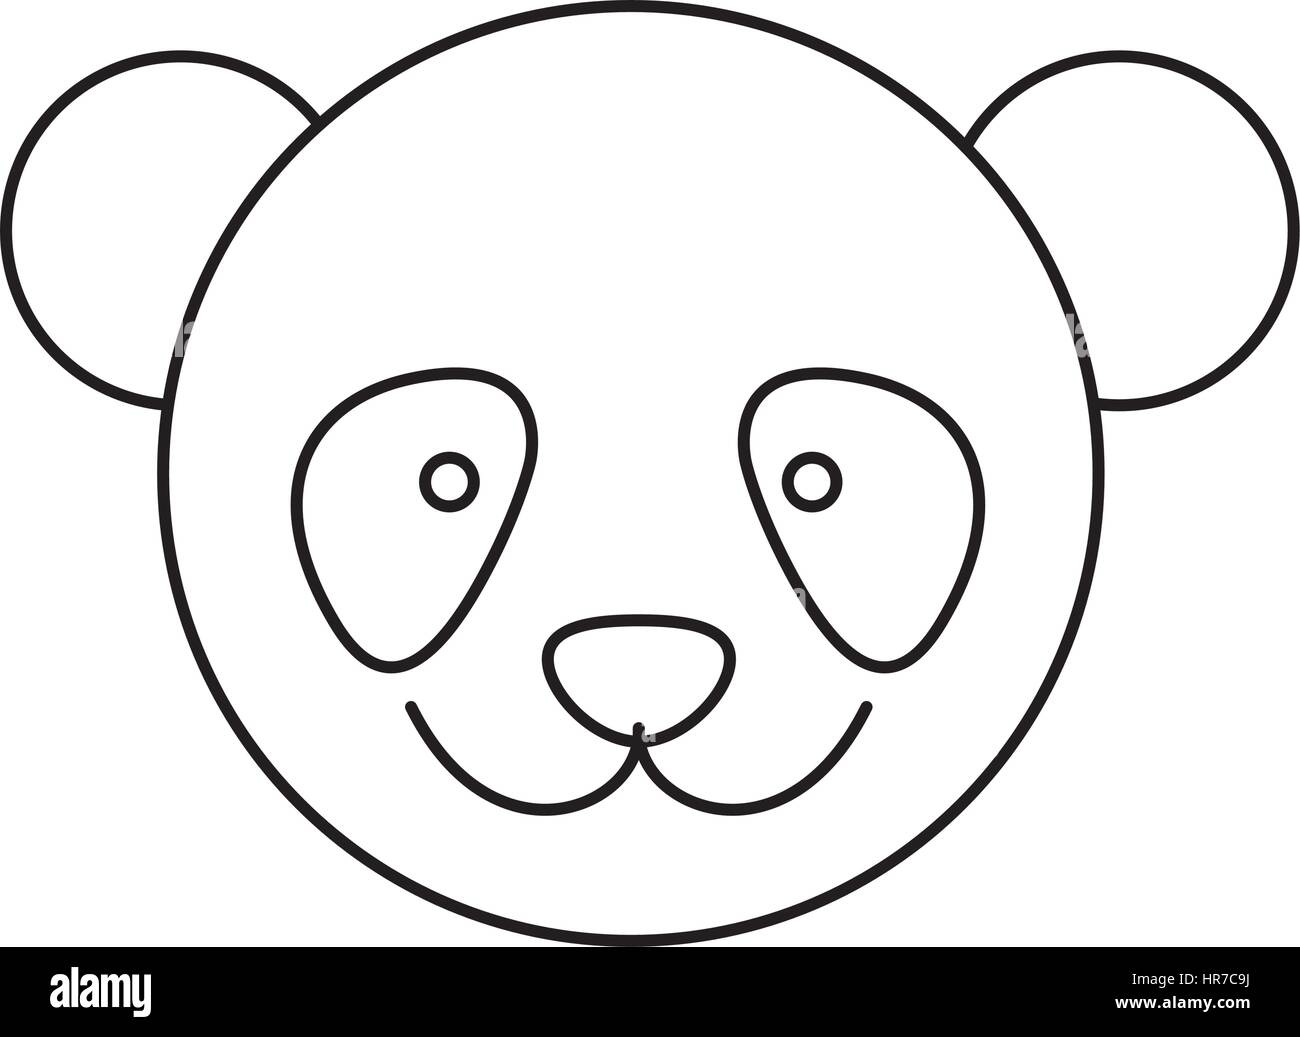 Border design panda illustration hi-res stock photography and images ...